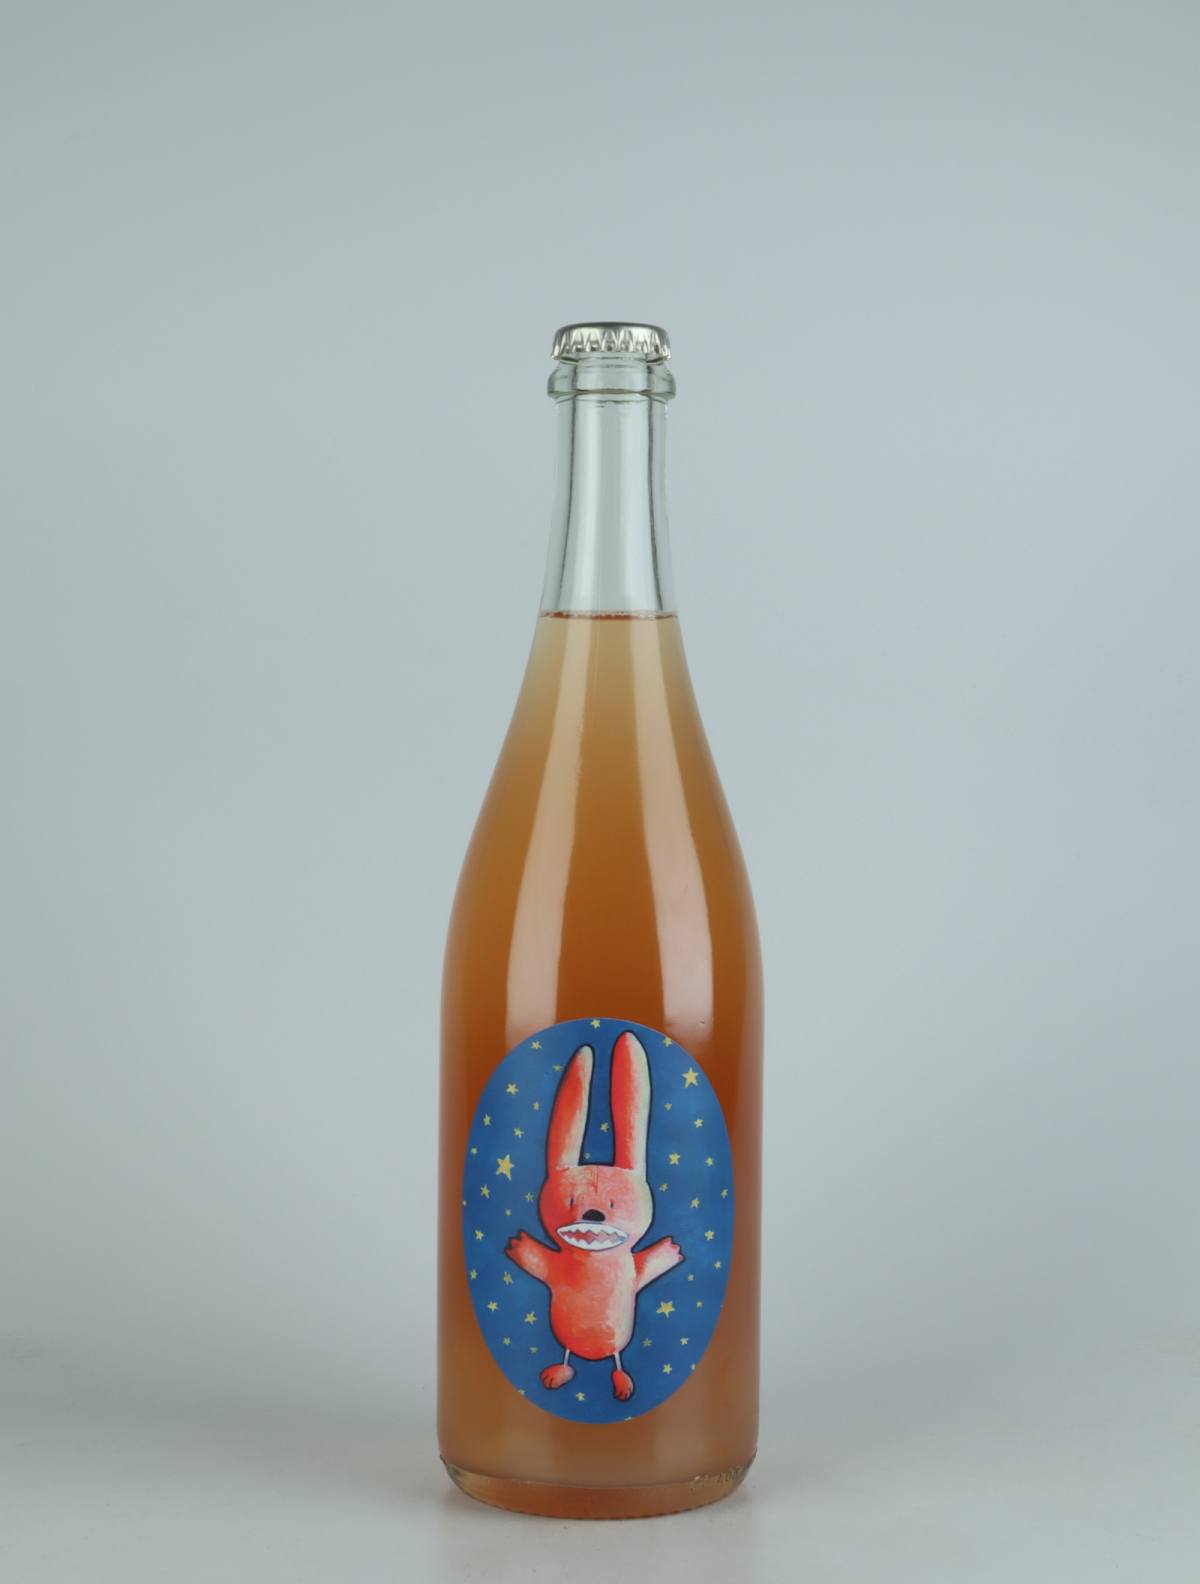 En flaske 2021 Astro Bunny Mousserende fra Wildman, Adelaide Hills i Australien